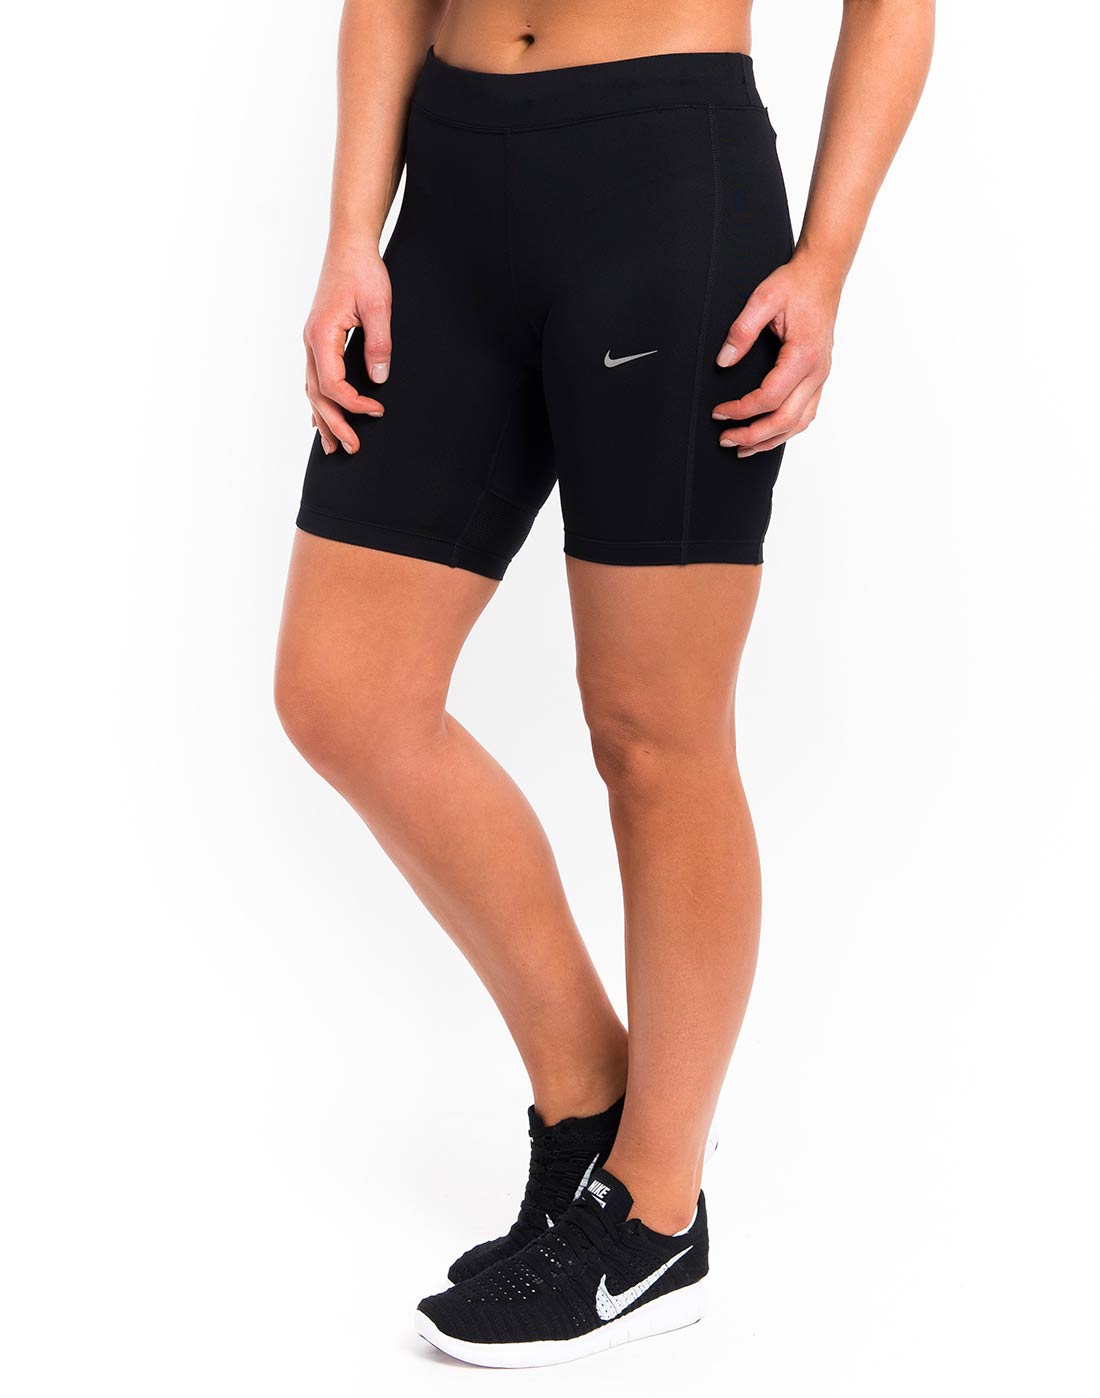 nike essential 8 inch running shorts ladies